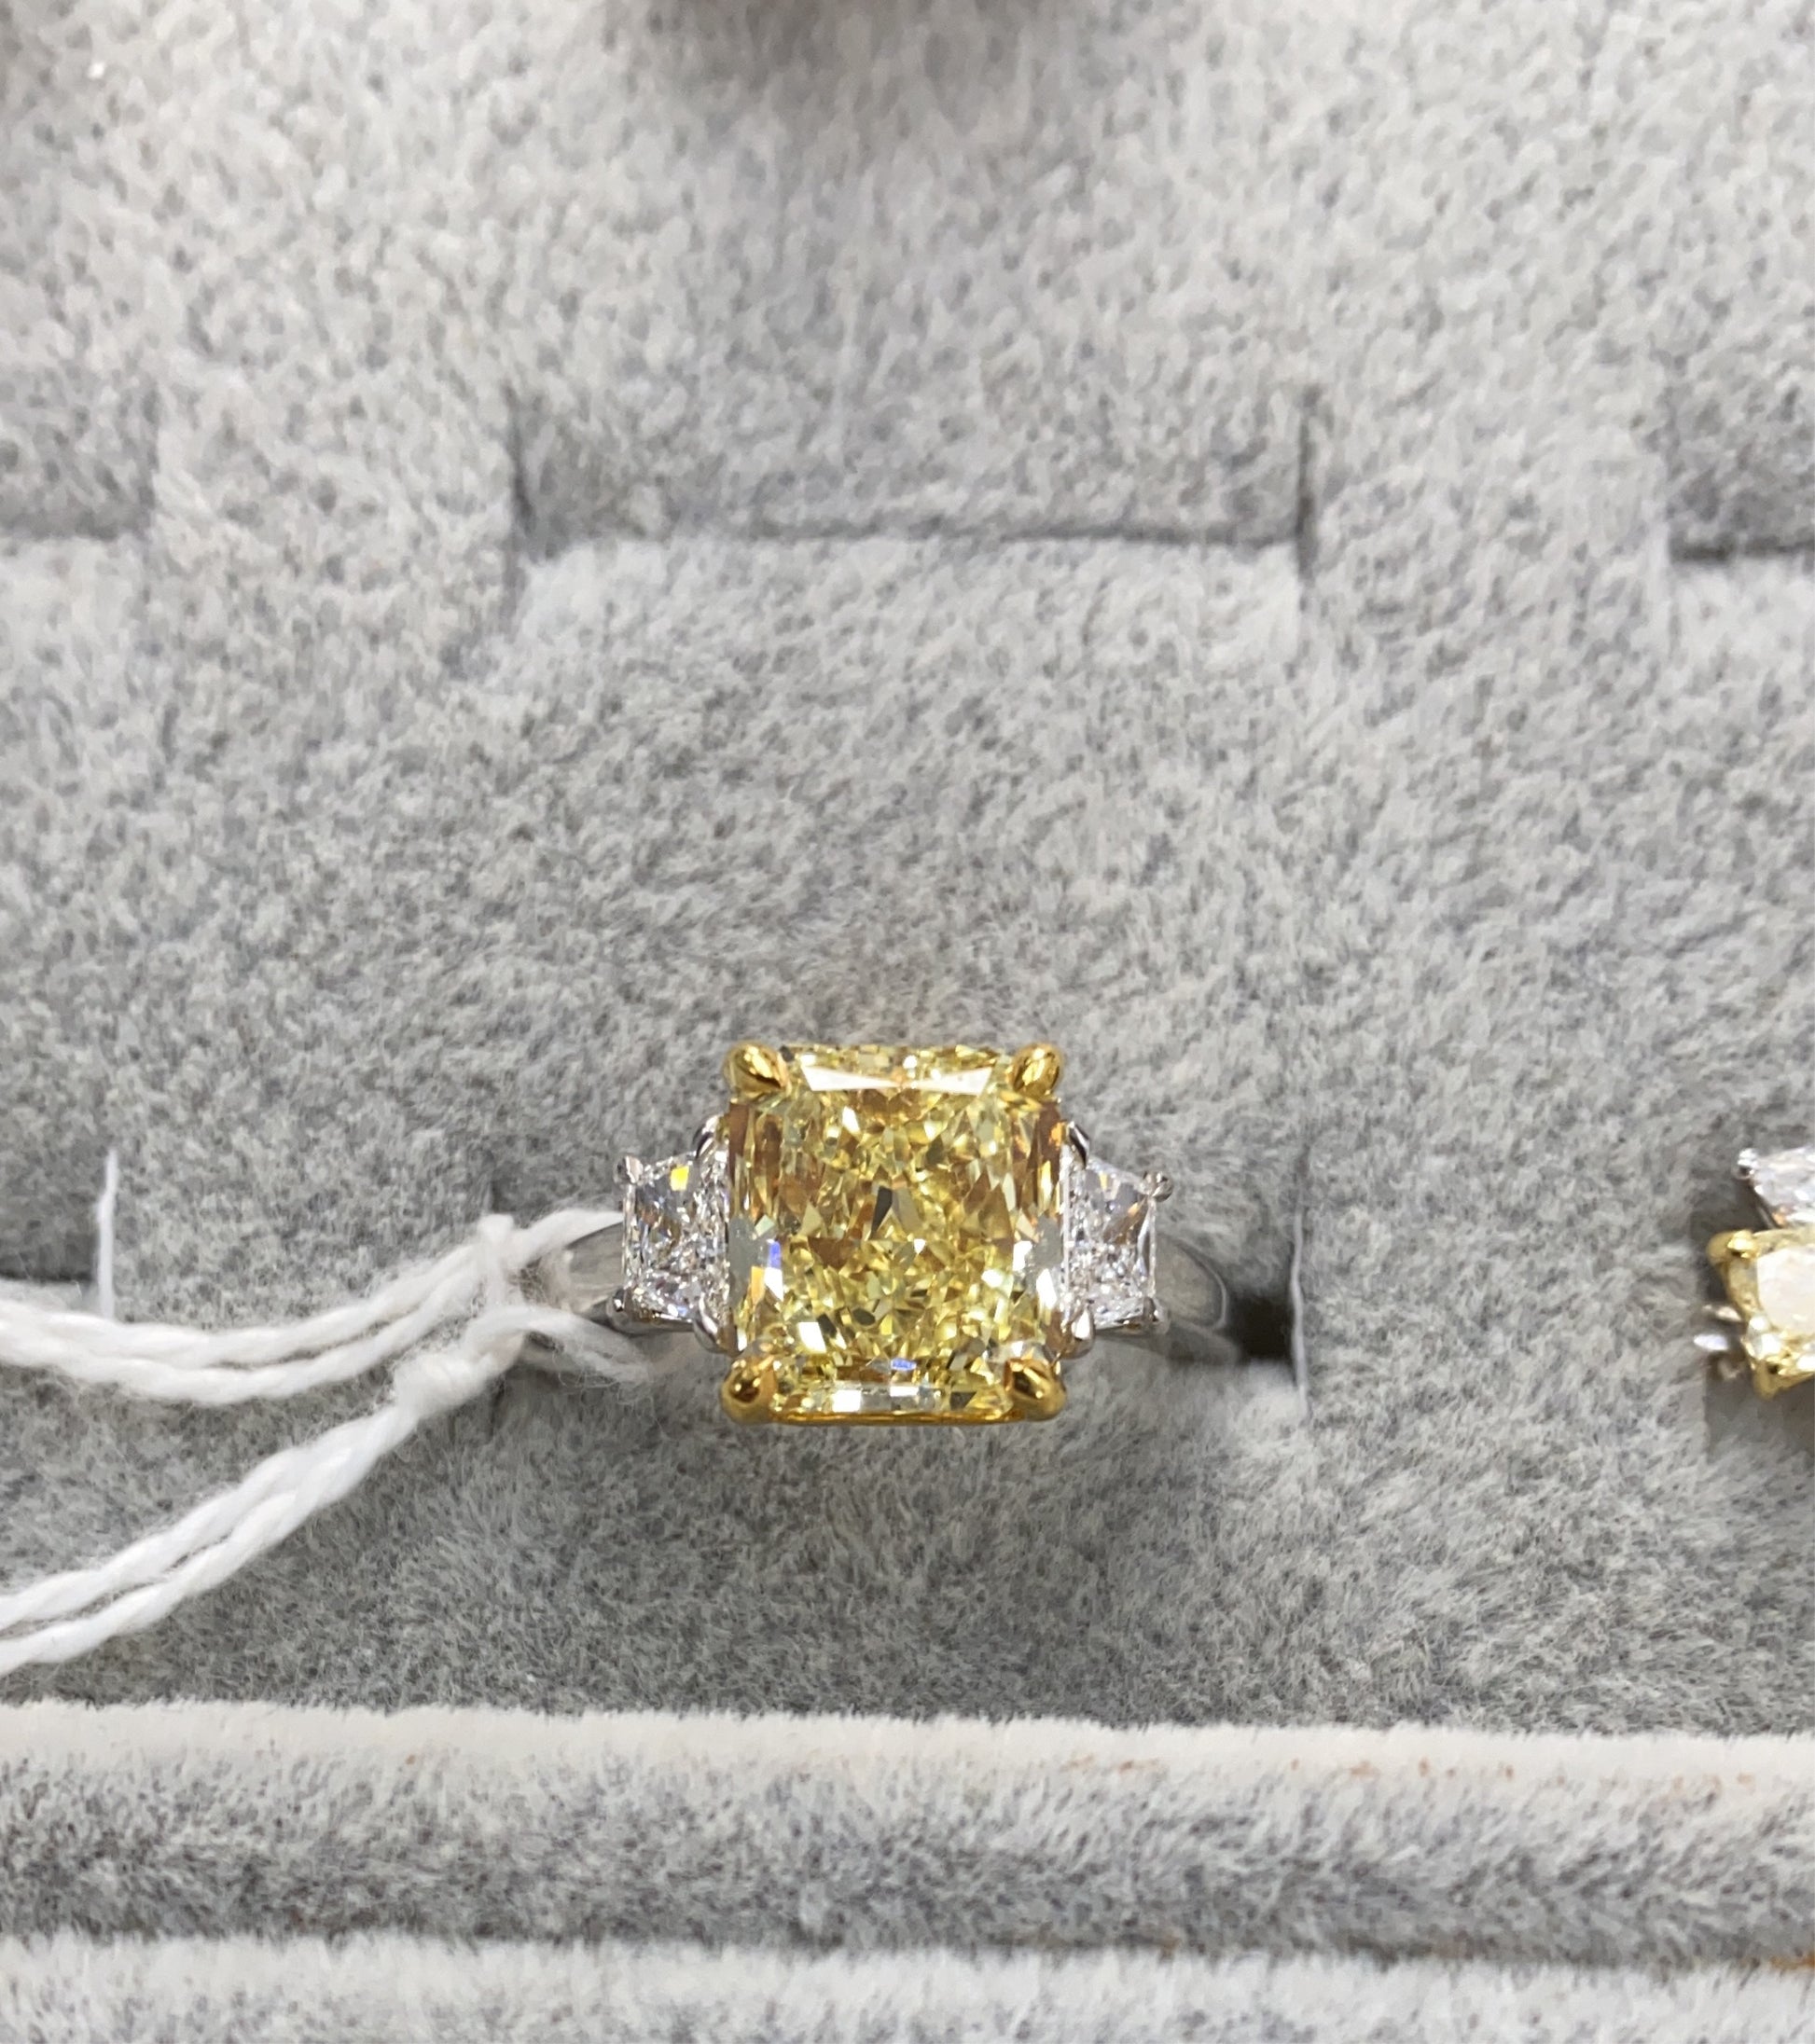 Fancy intense yellow diamond ring. Yellow diamond engagement ring. Yellow diamond jewelry. Yellow cushion cut diamond. Canary yellow diamond ring.